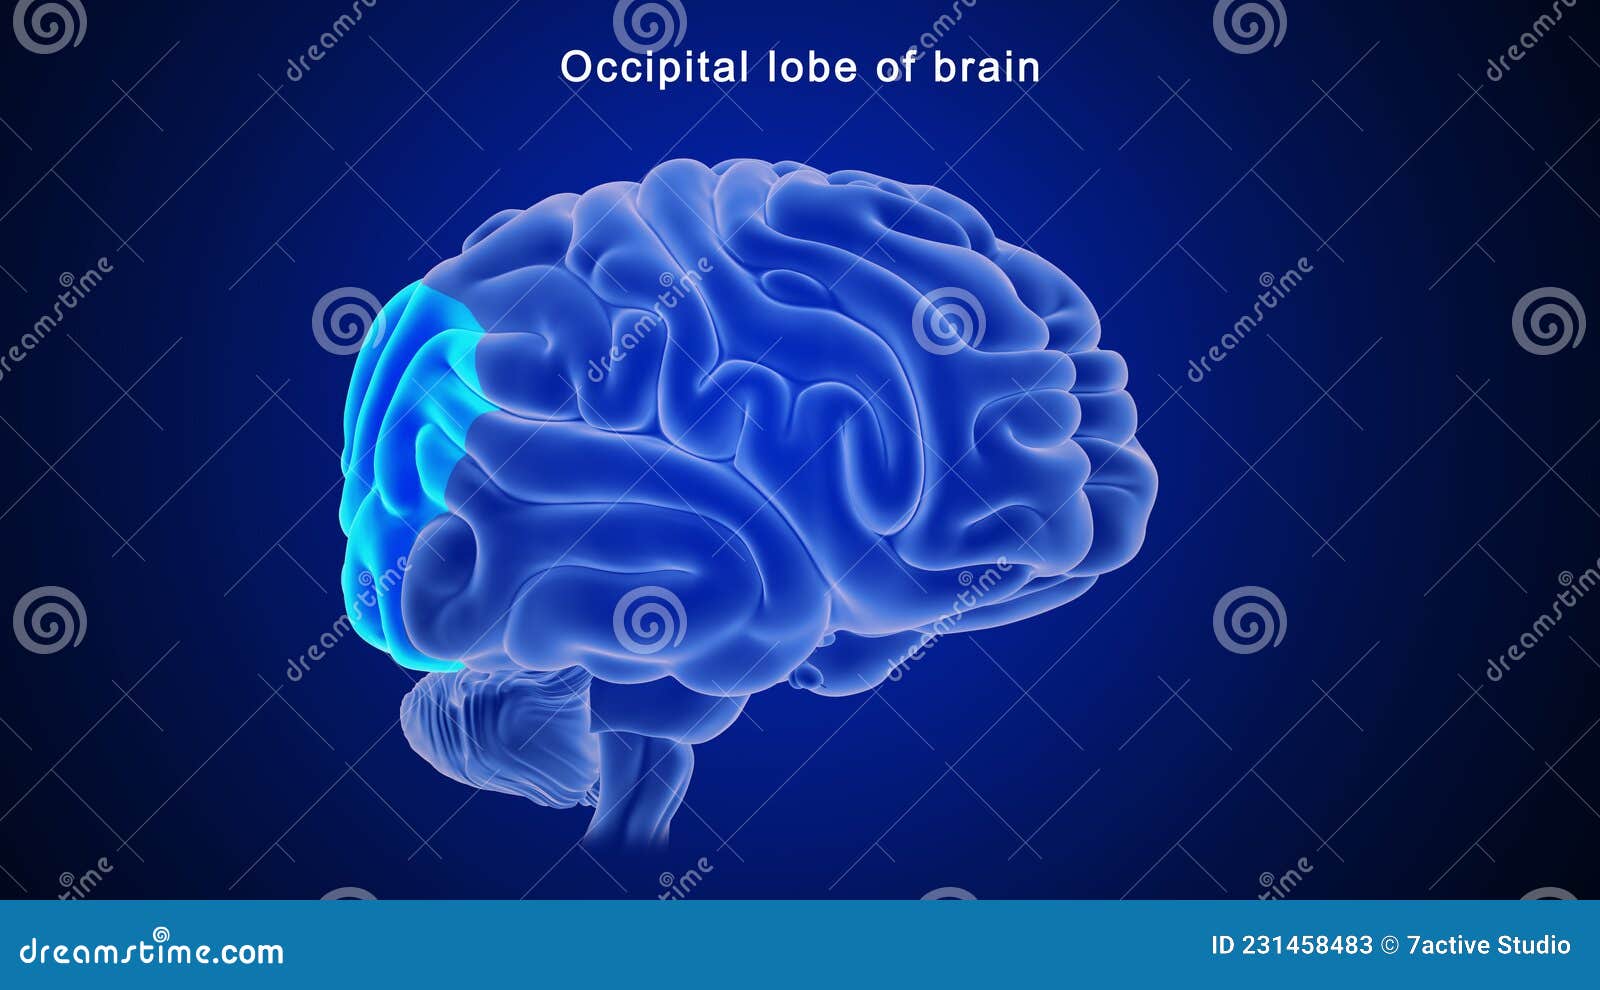 occipital lobe of human brain